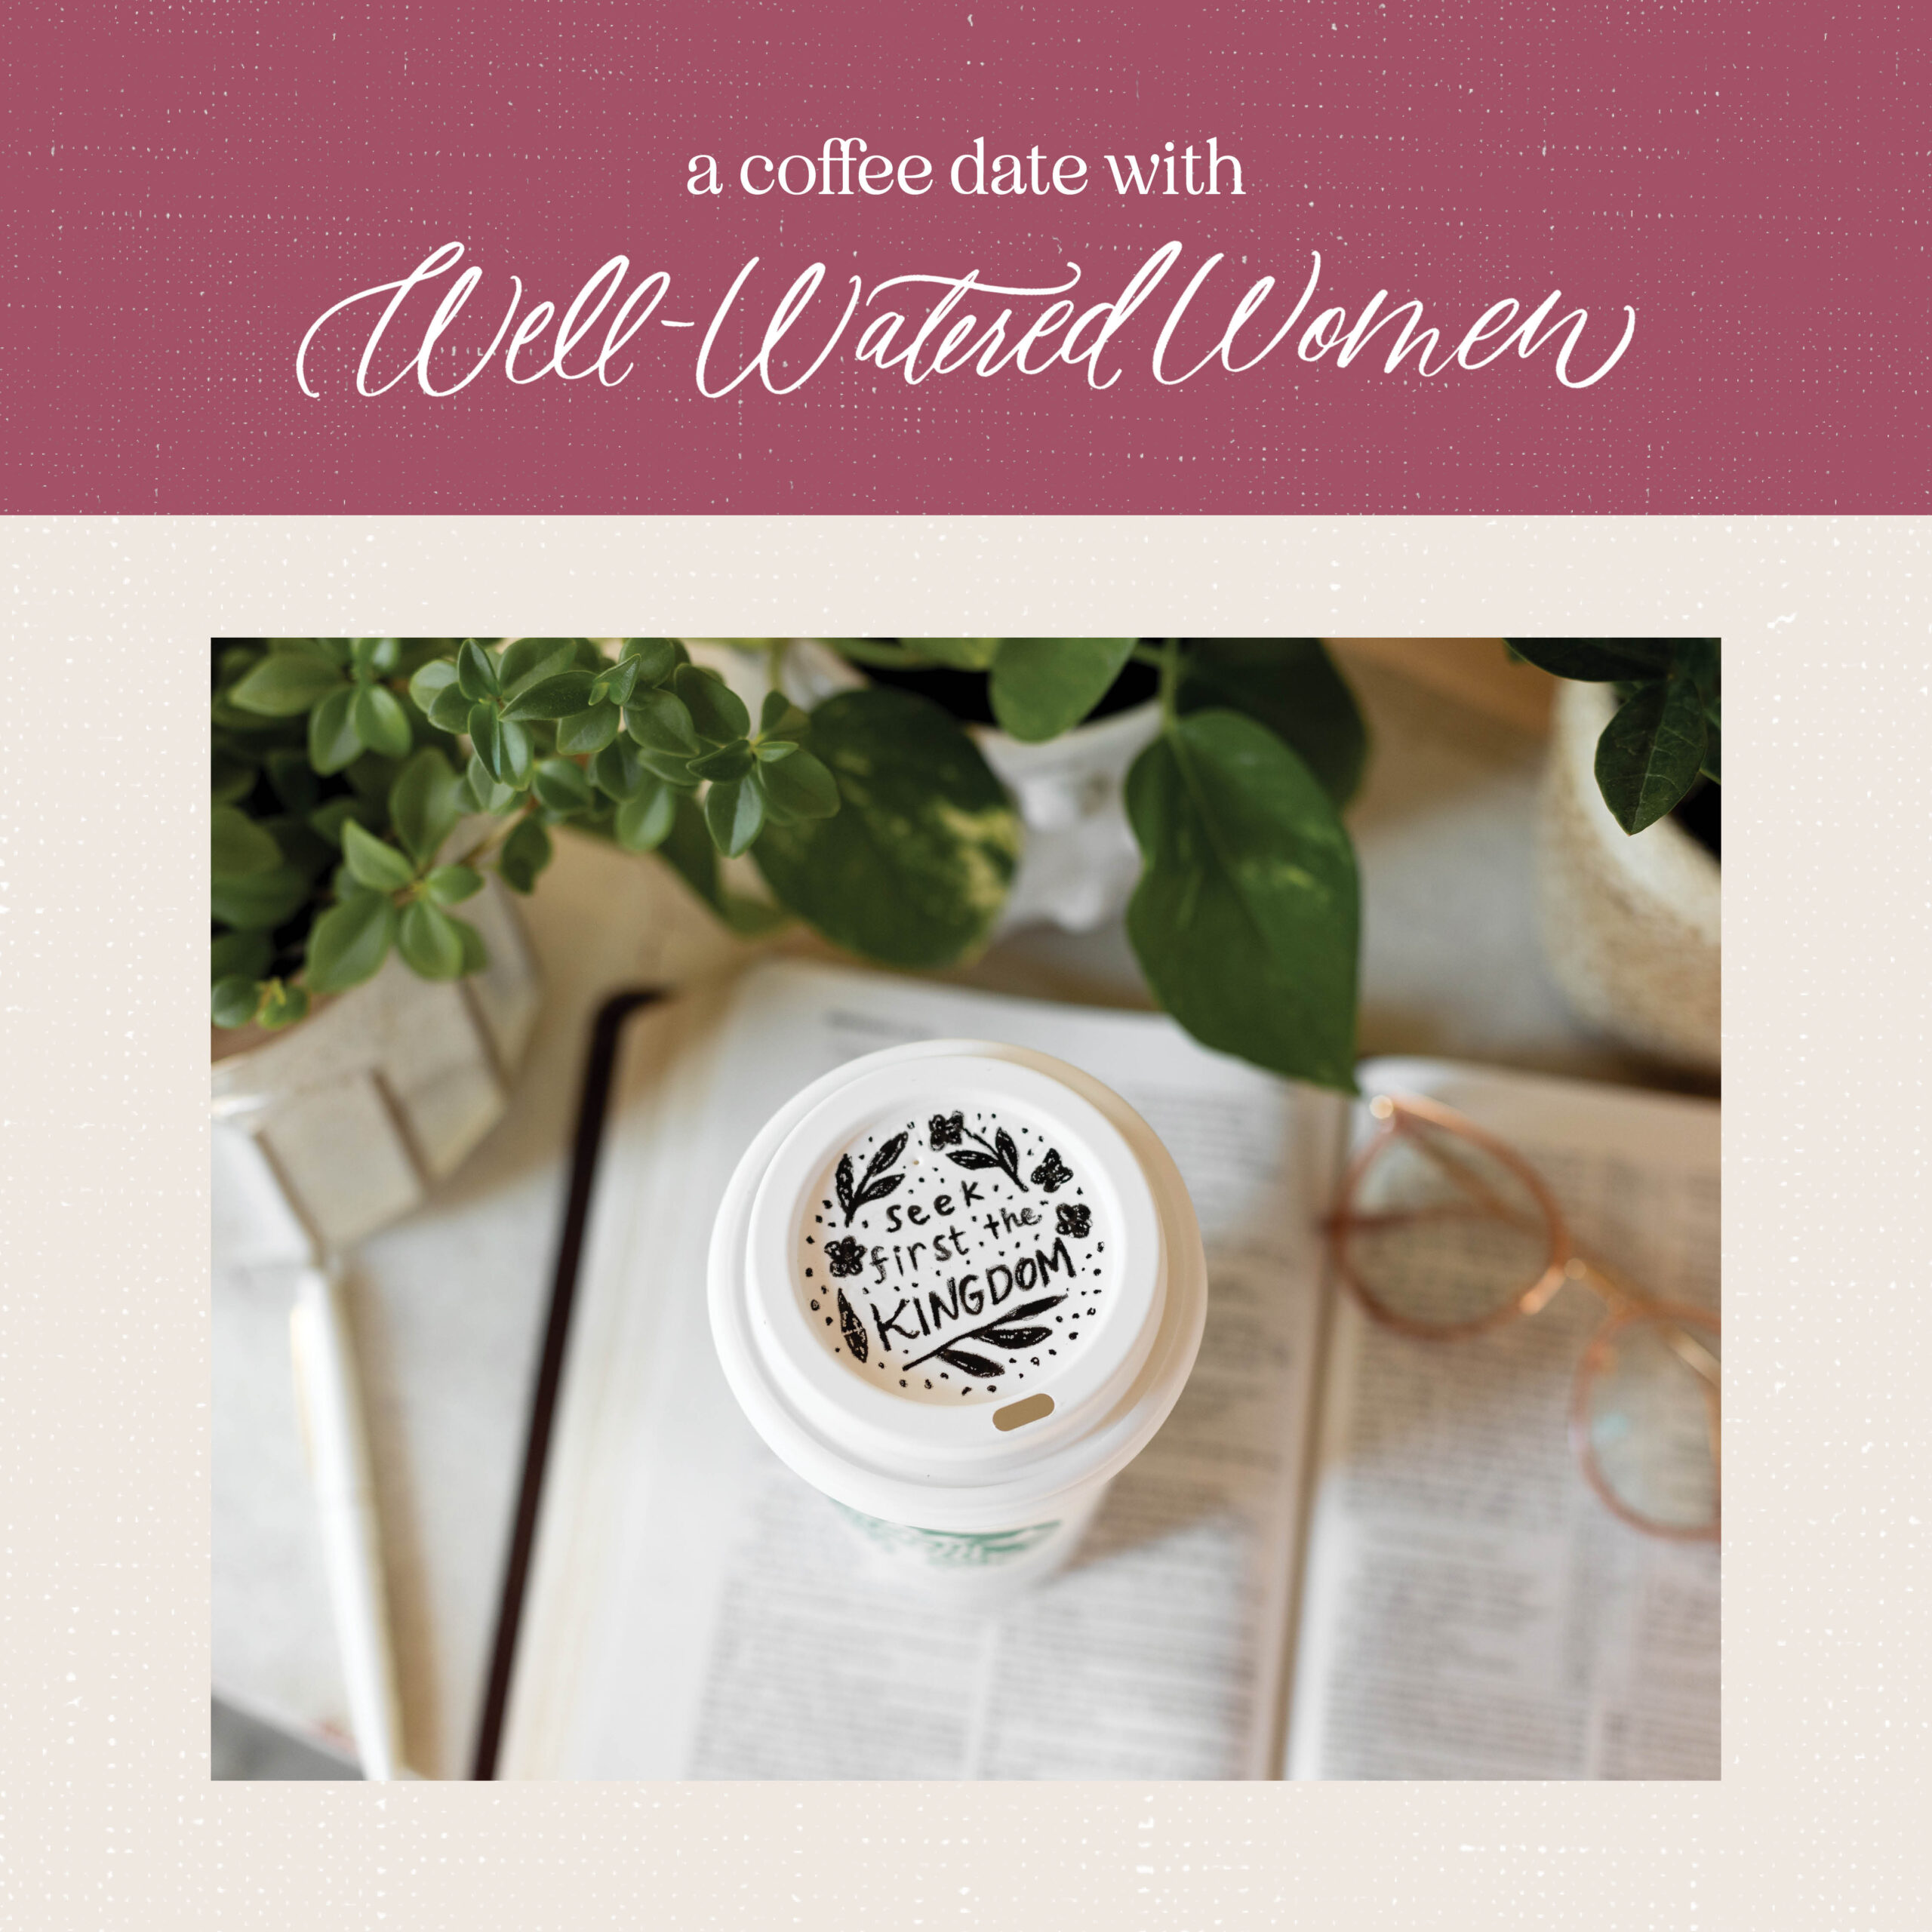 Well-Watered Women Coffee Date